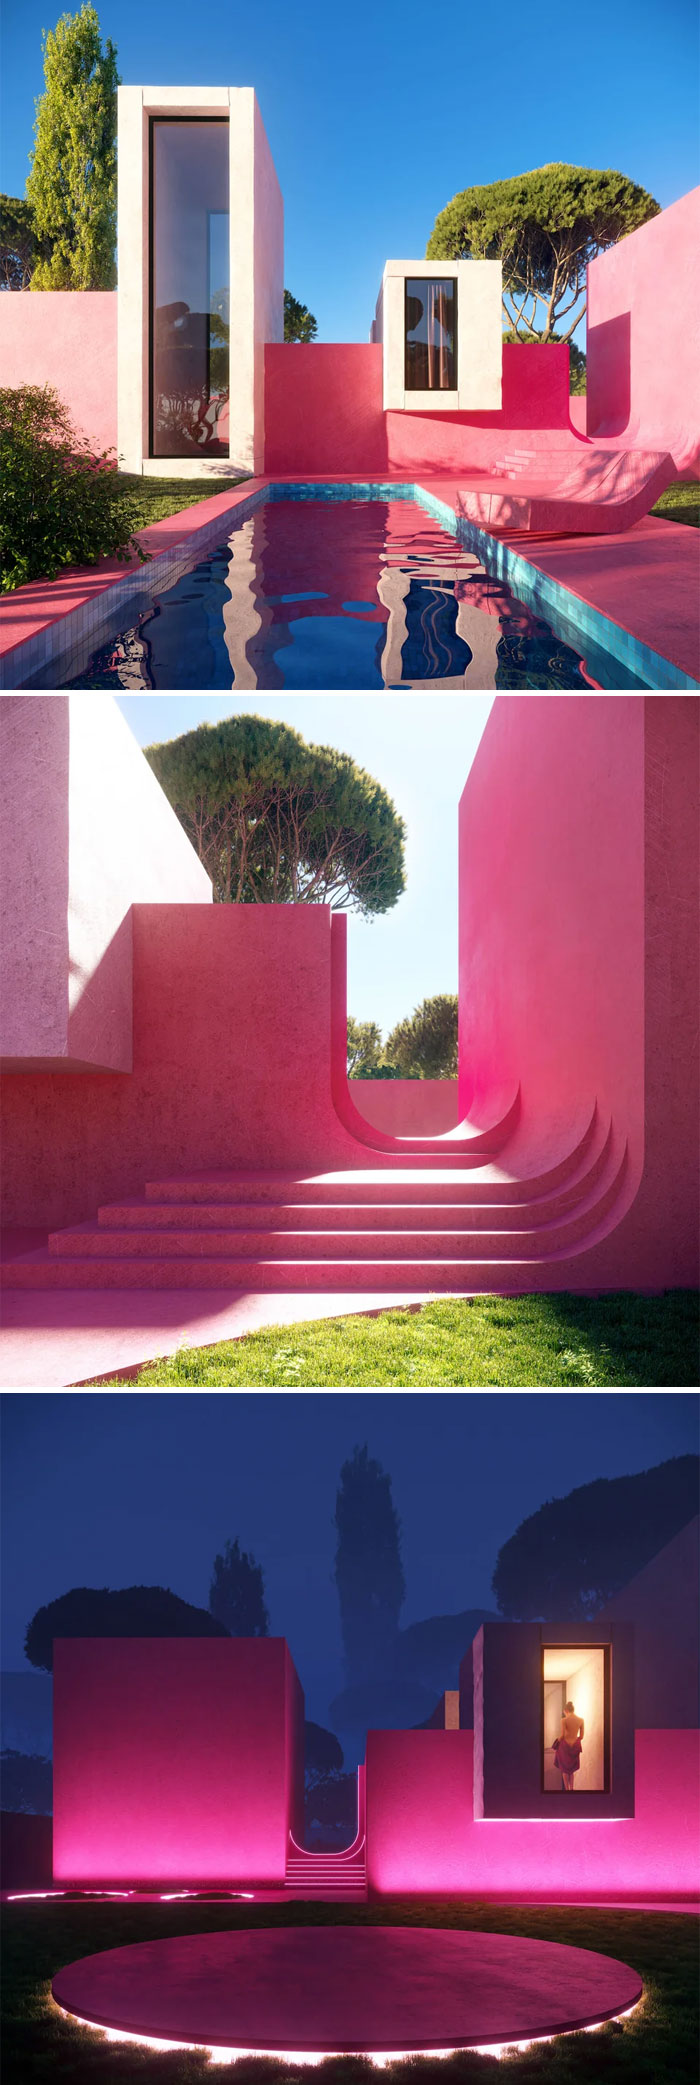 Pink Pavilion, Los Angeles, California By Davit & Mary Jilavyan / Lemeal Studio